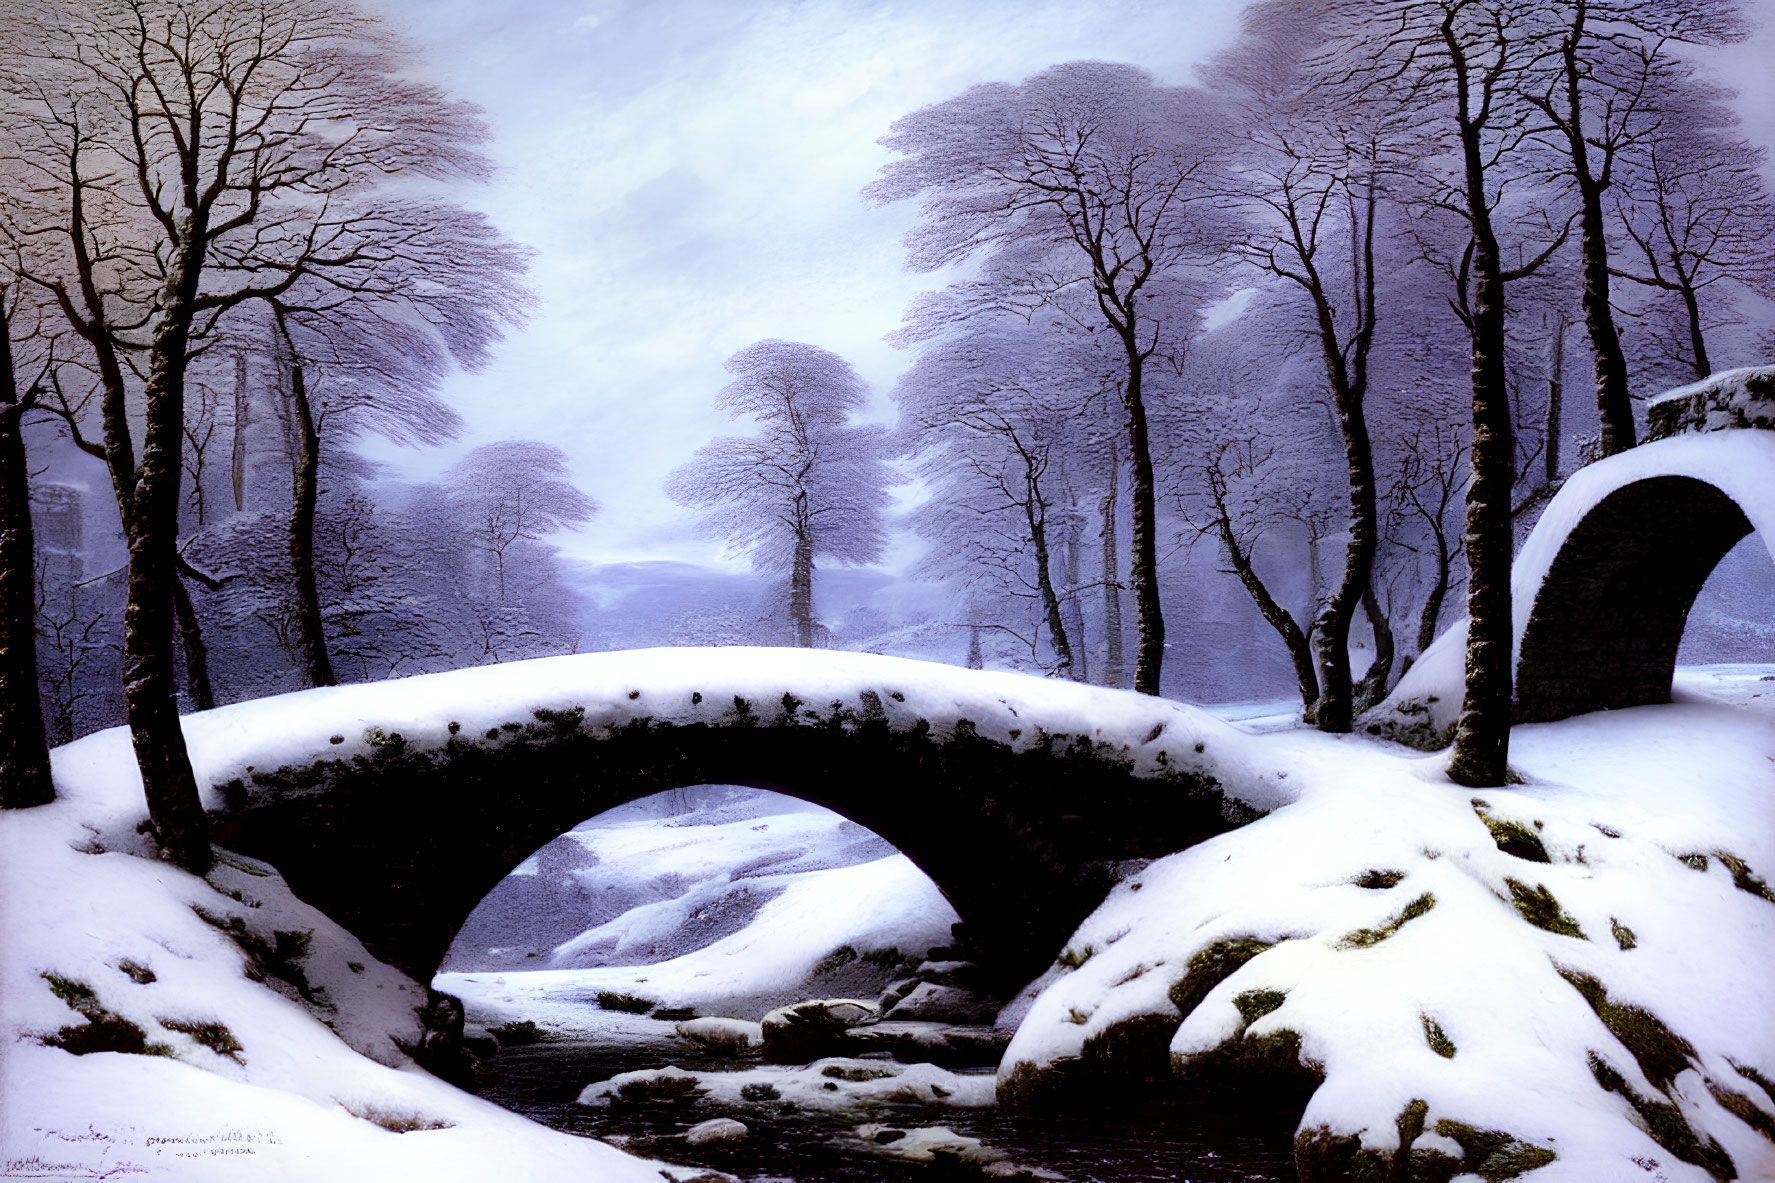 Snow-covered stone bridge over frozen stream in misty winter landscape